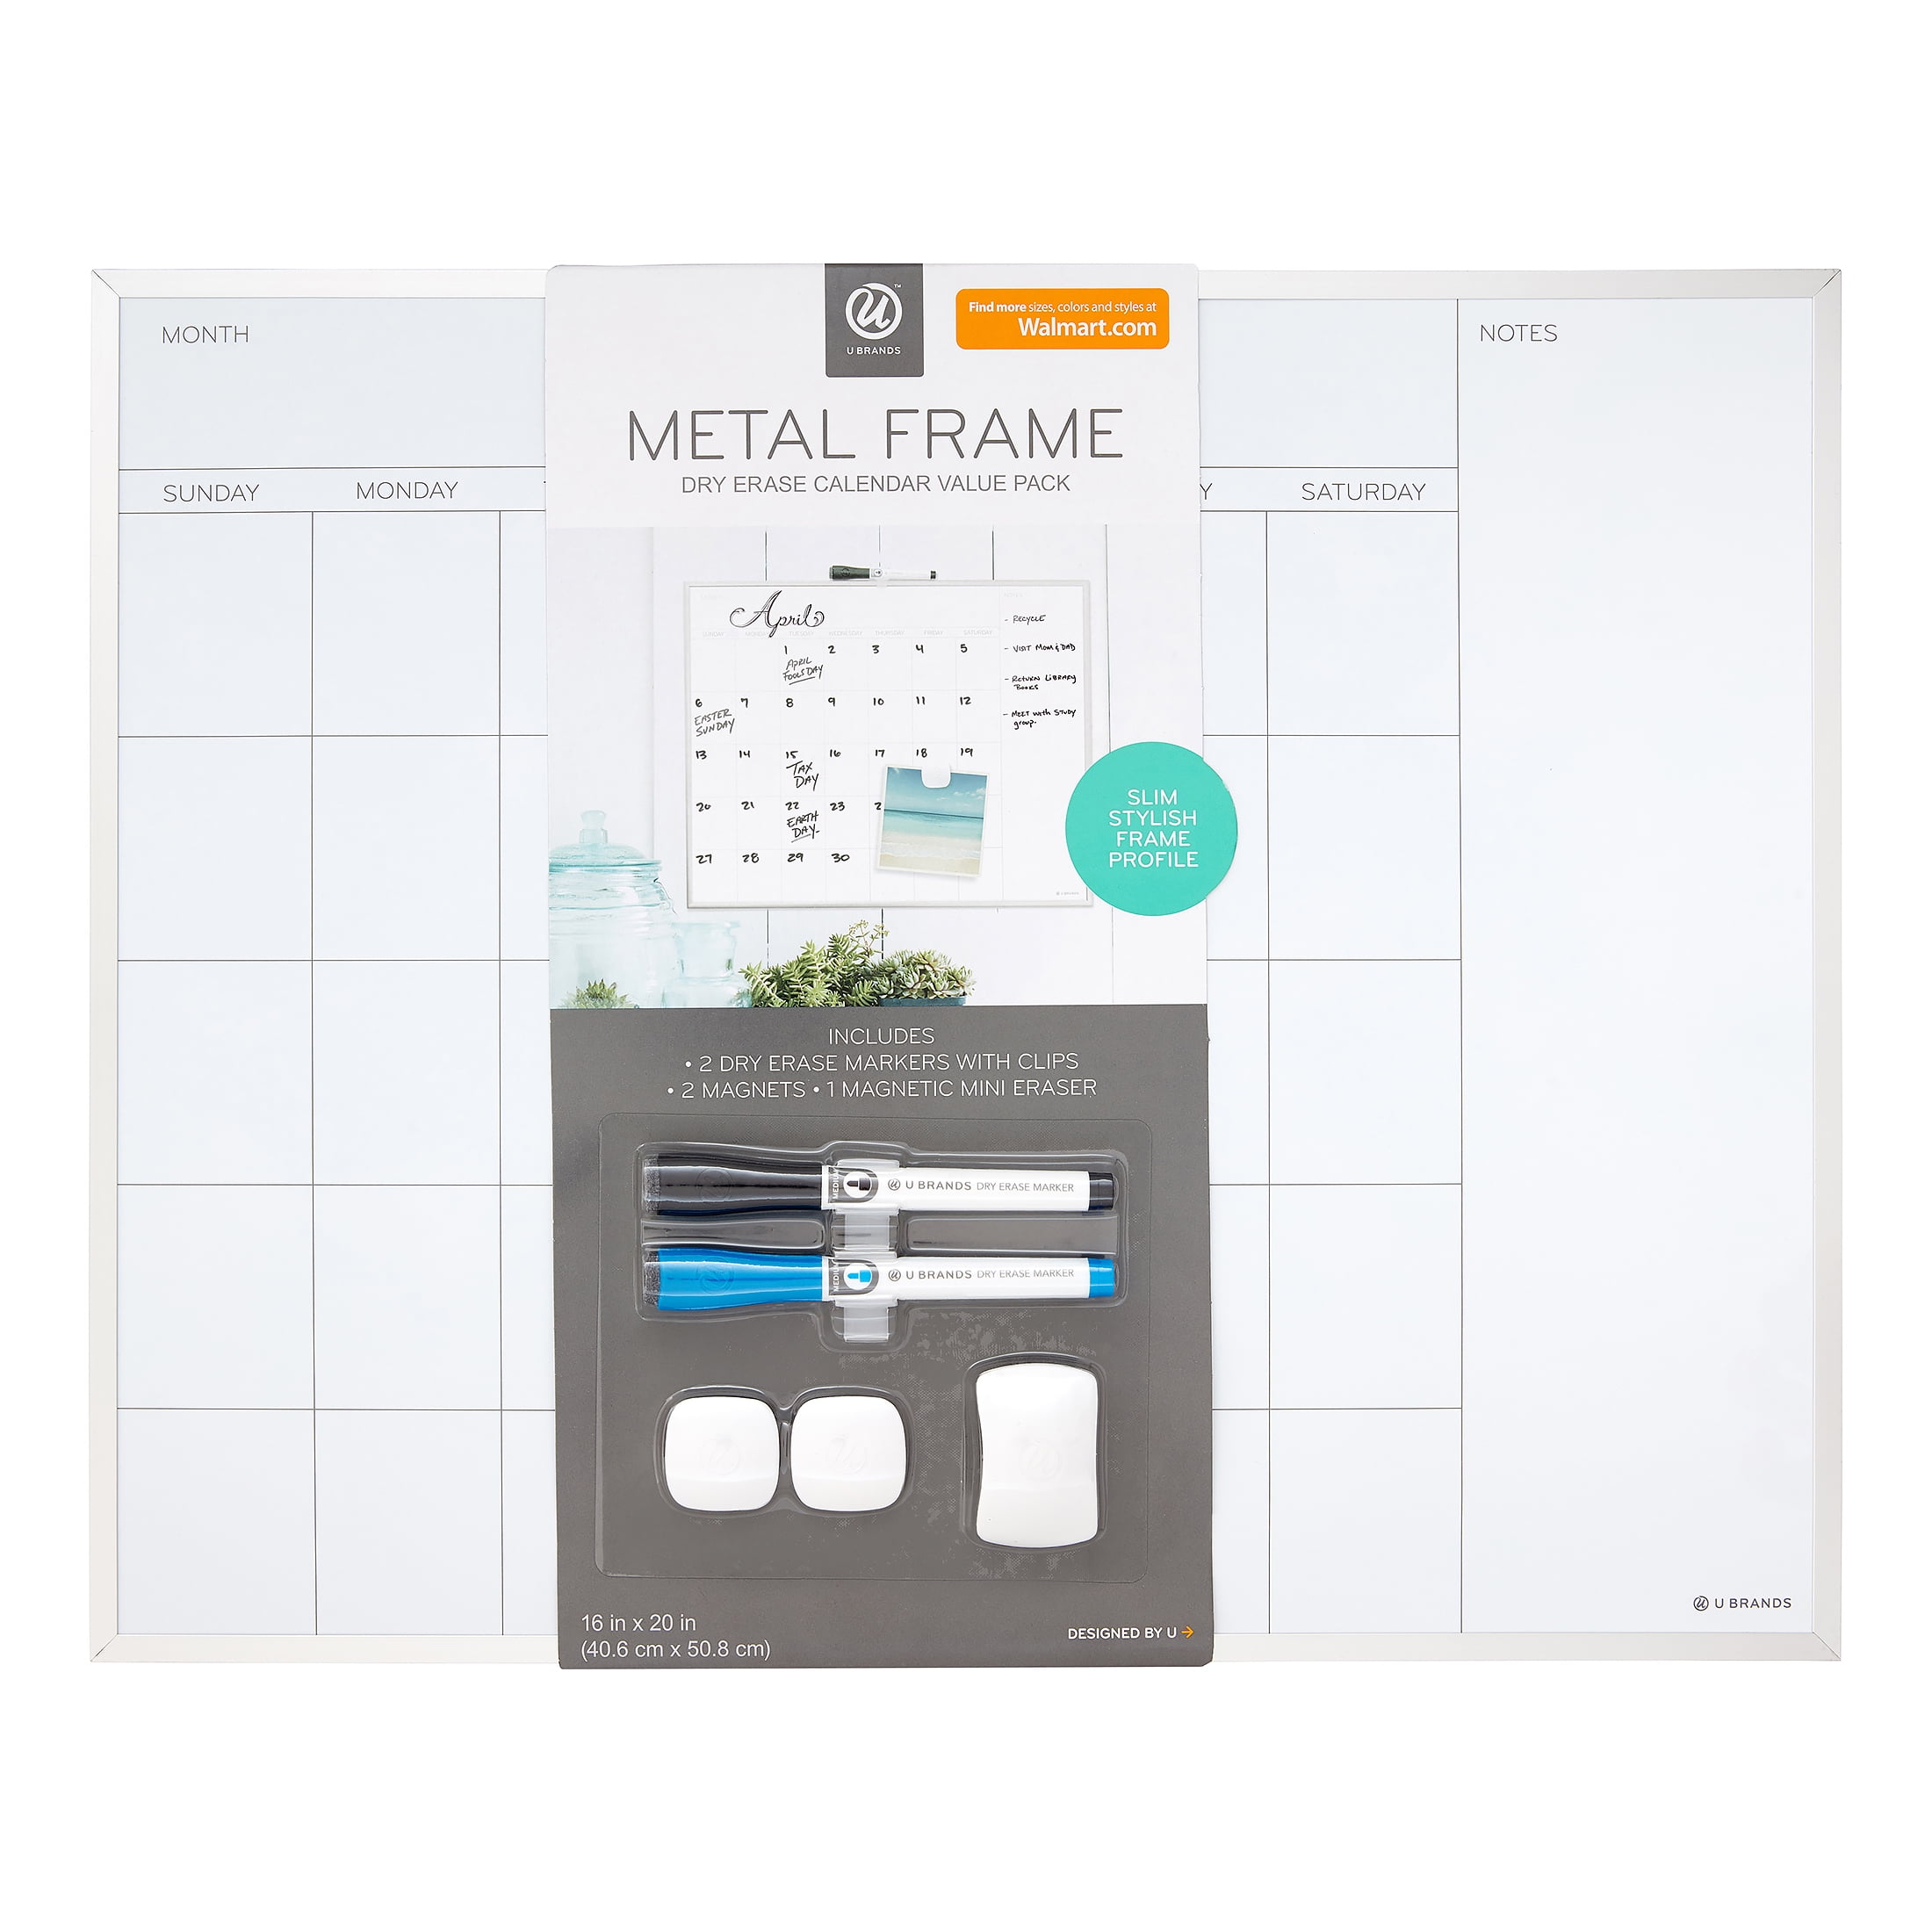 U Brands 16" x 20" Aluminum Dry Erase Calendar Board and Expo